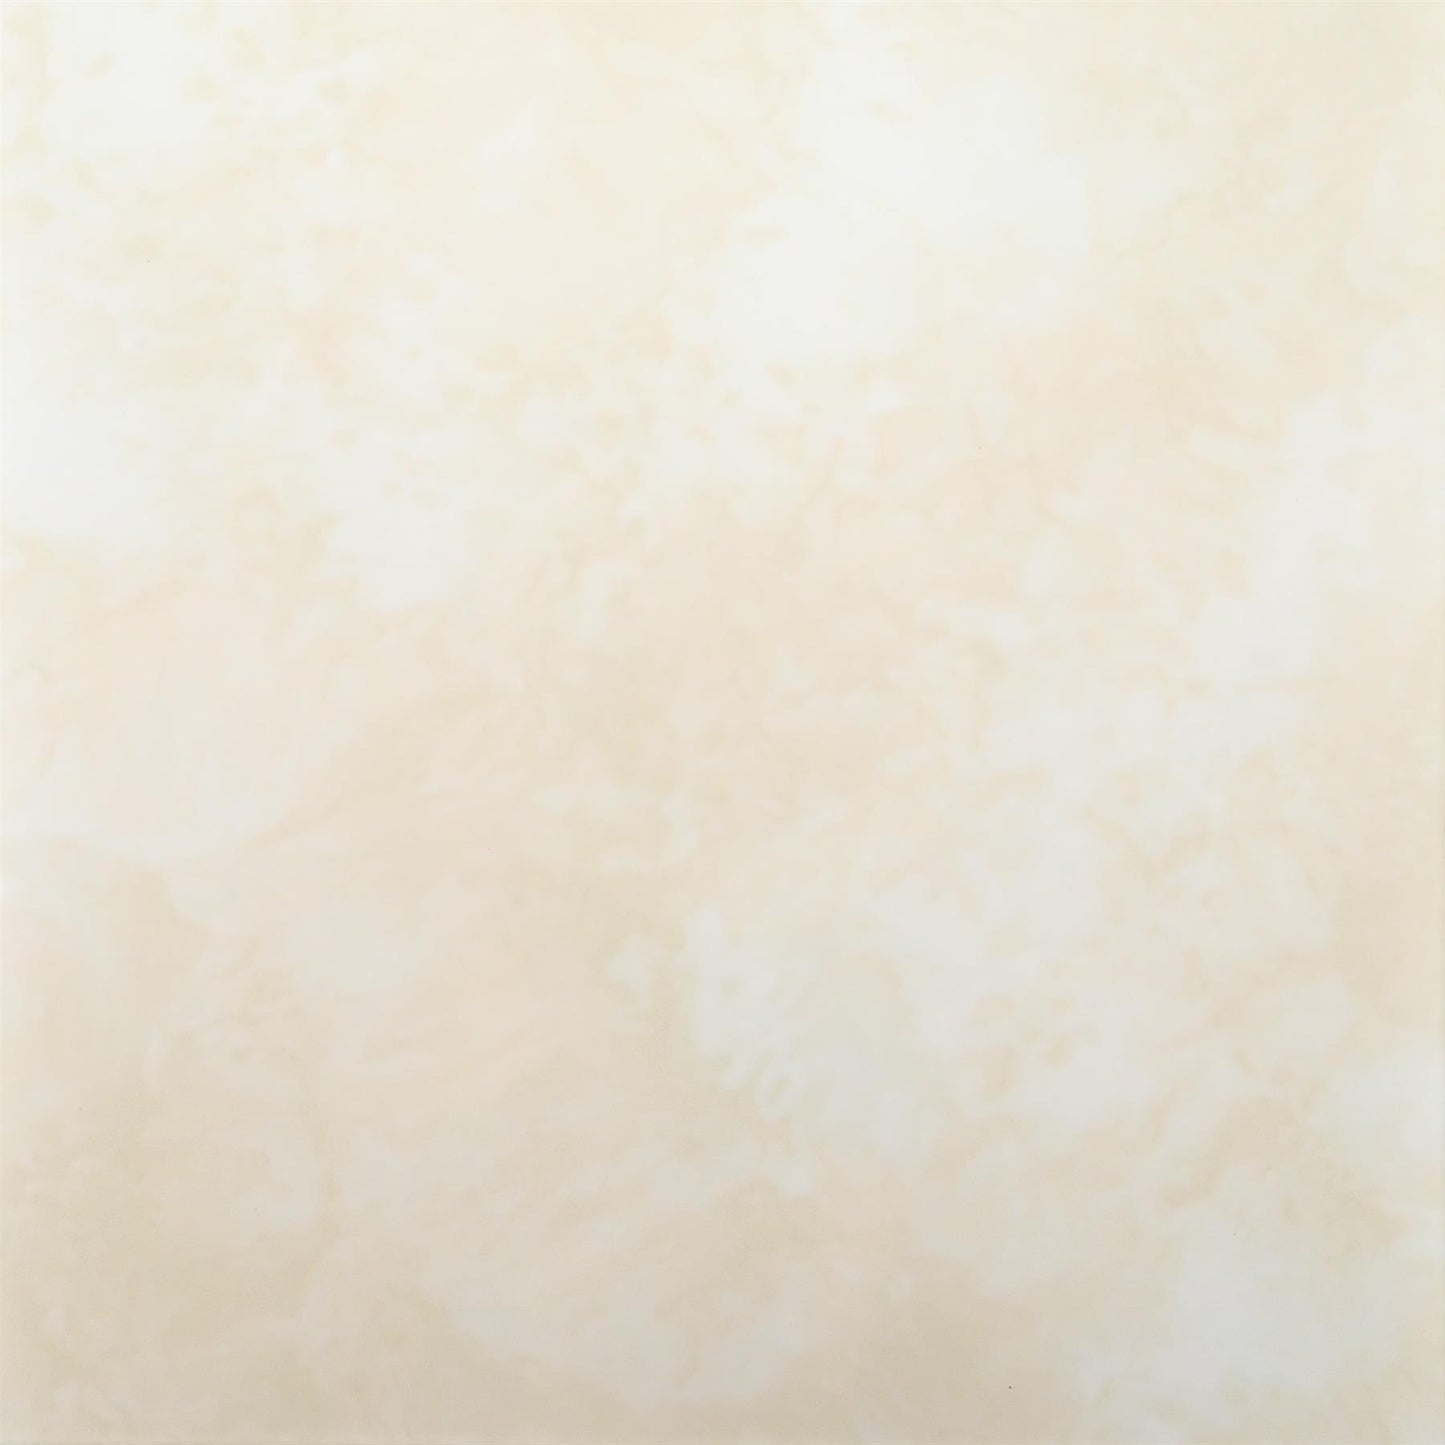 Incudo White Jade Stone Acrylic Sheet - 400x300x3mm (15.7x11.81x0.12")